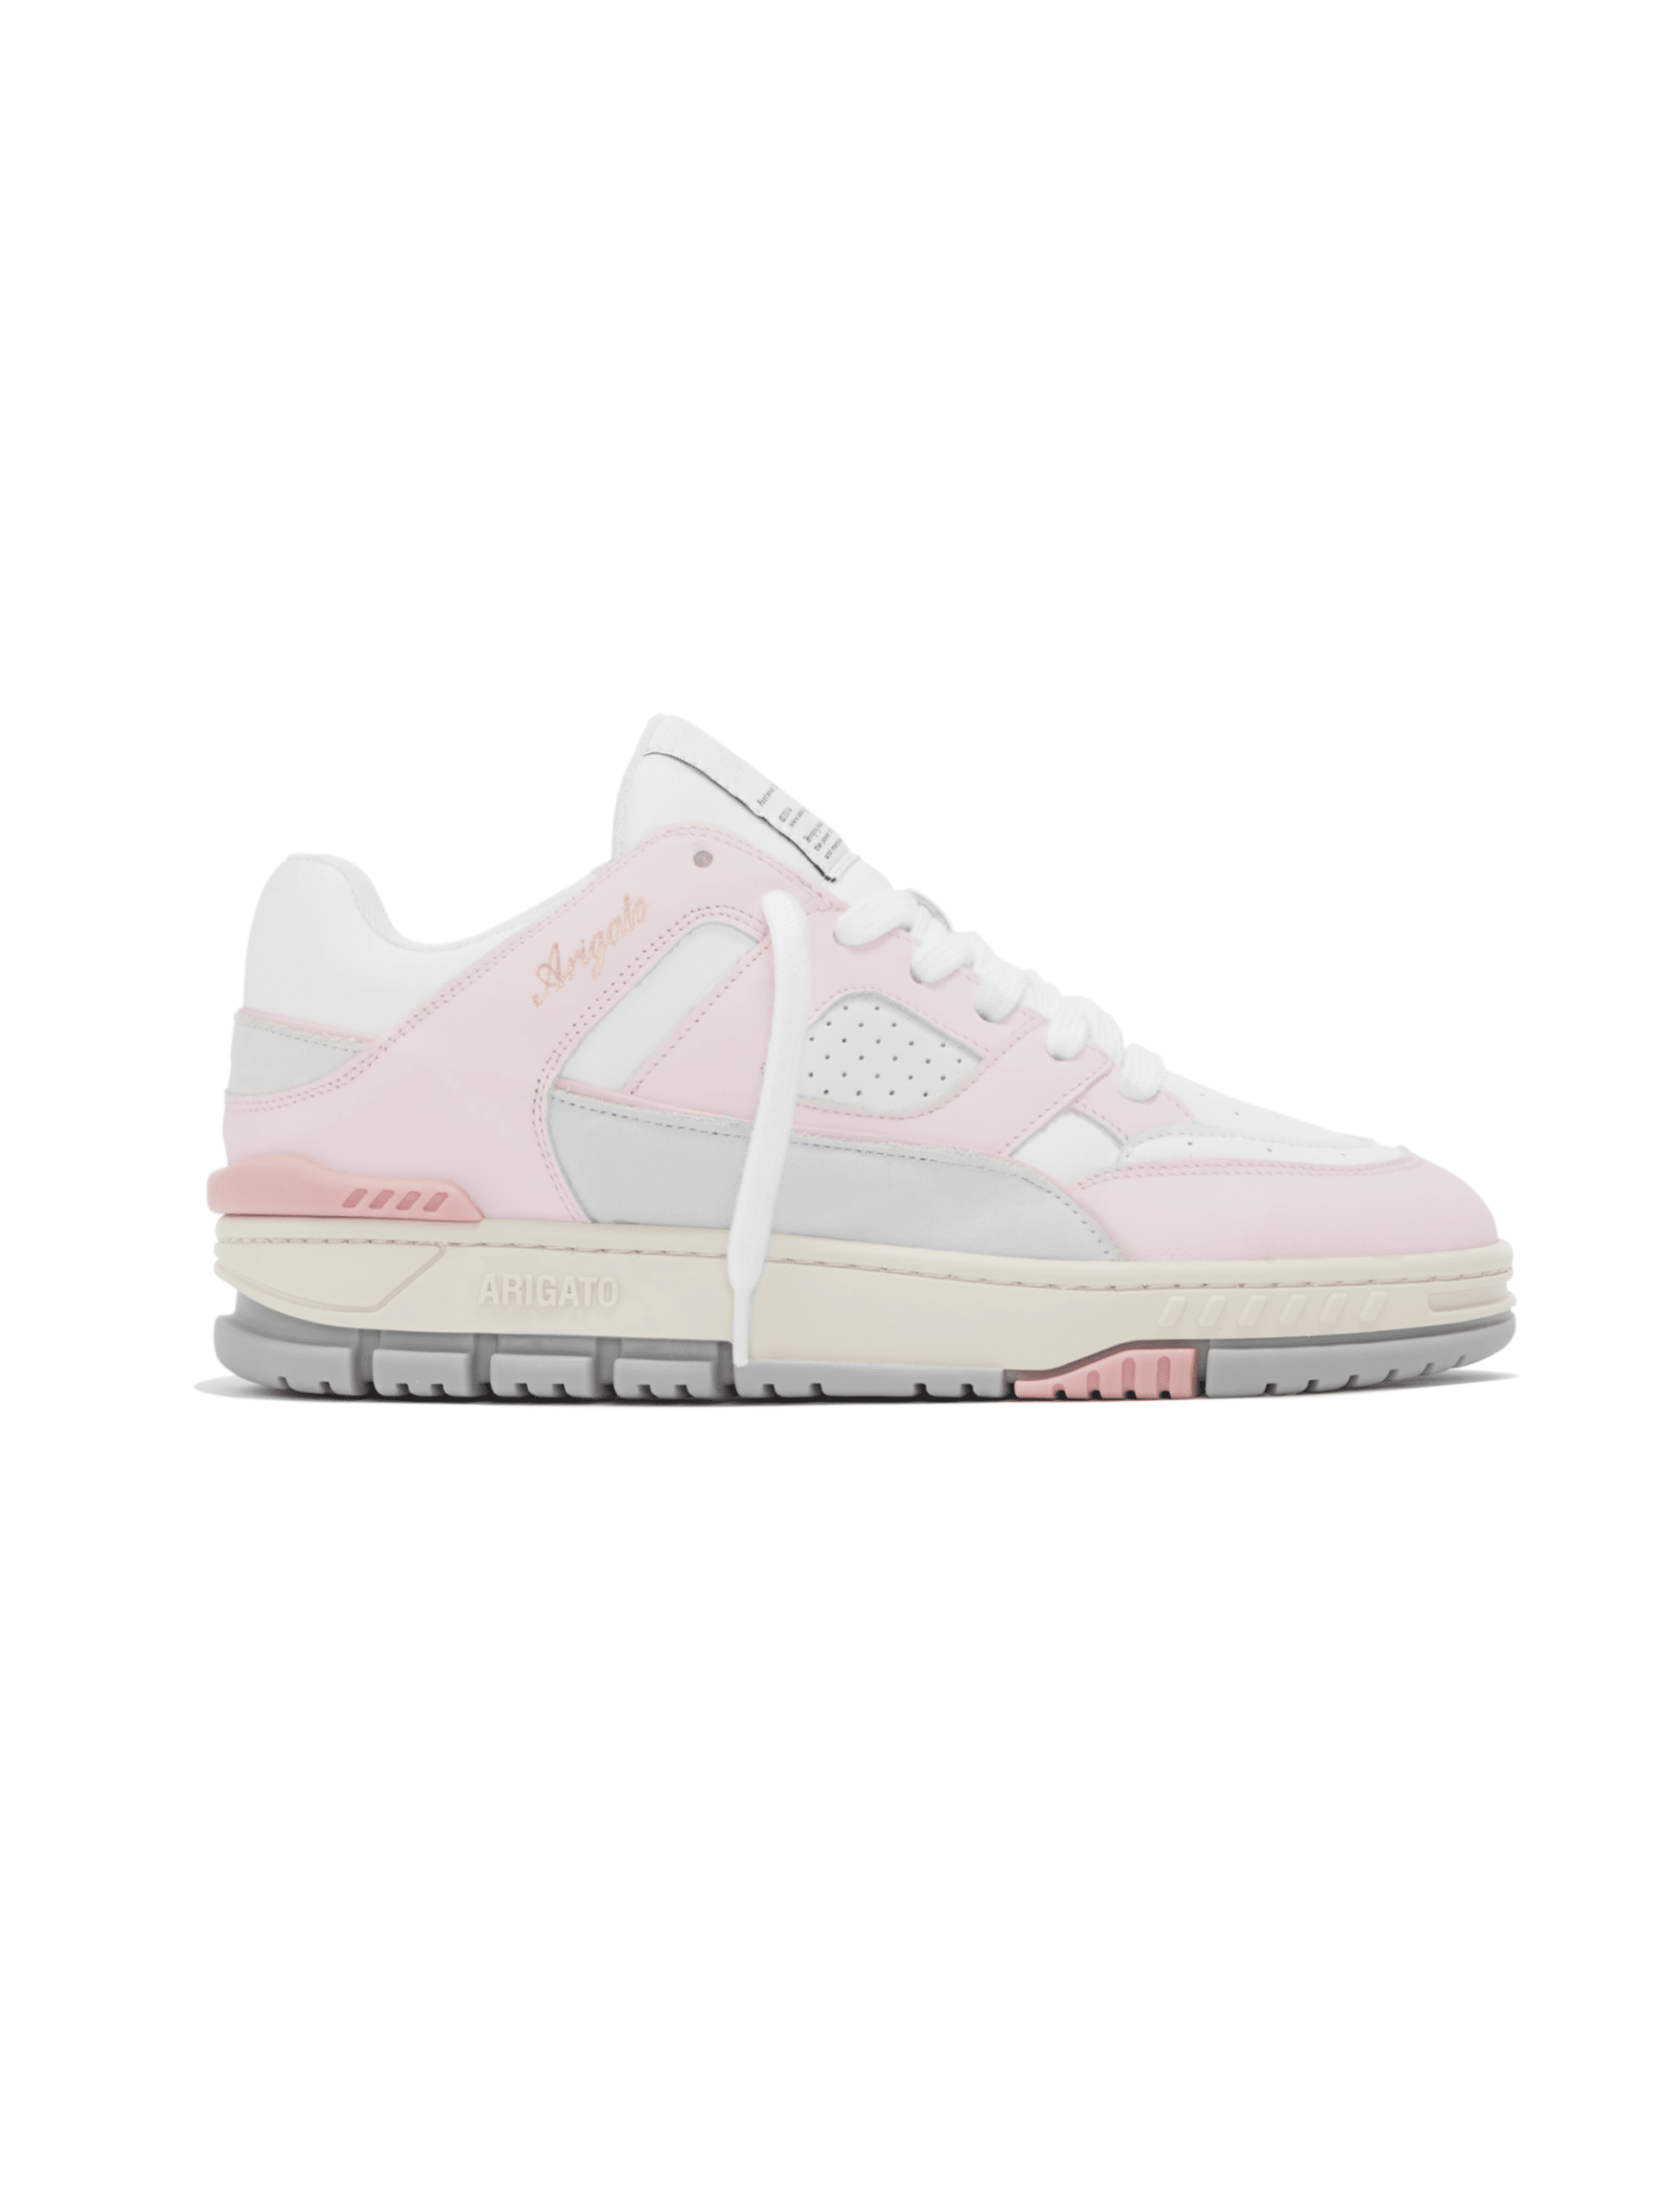 Area Lo Sneaker / Pink & White Womens Axel Arigato 